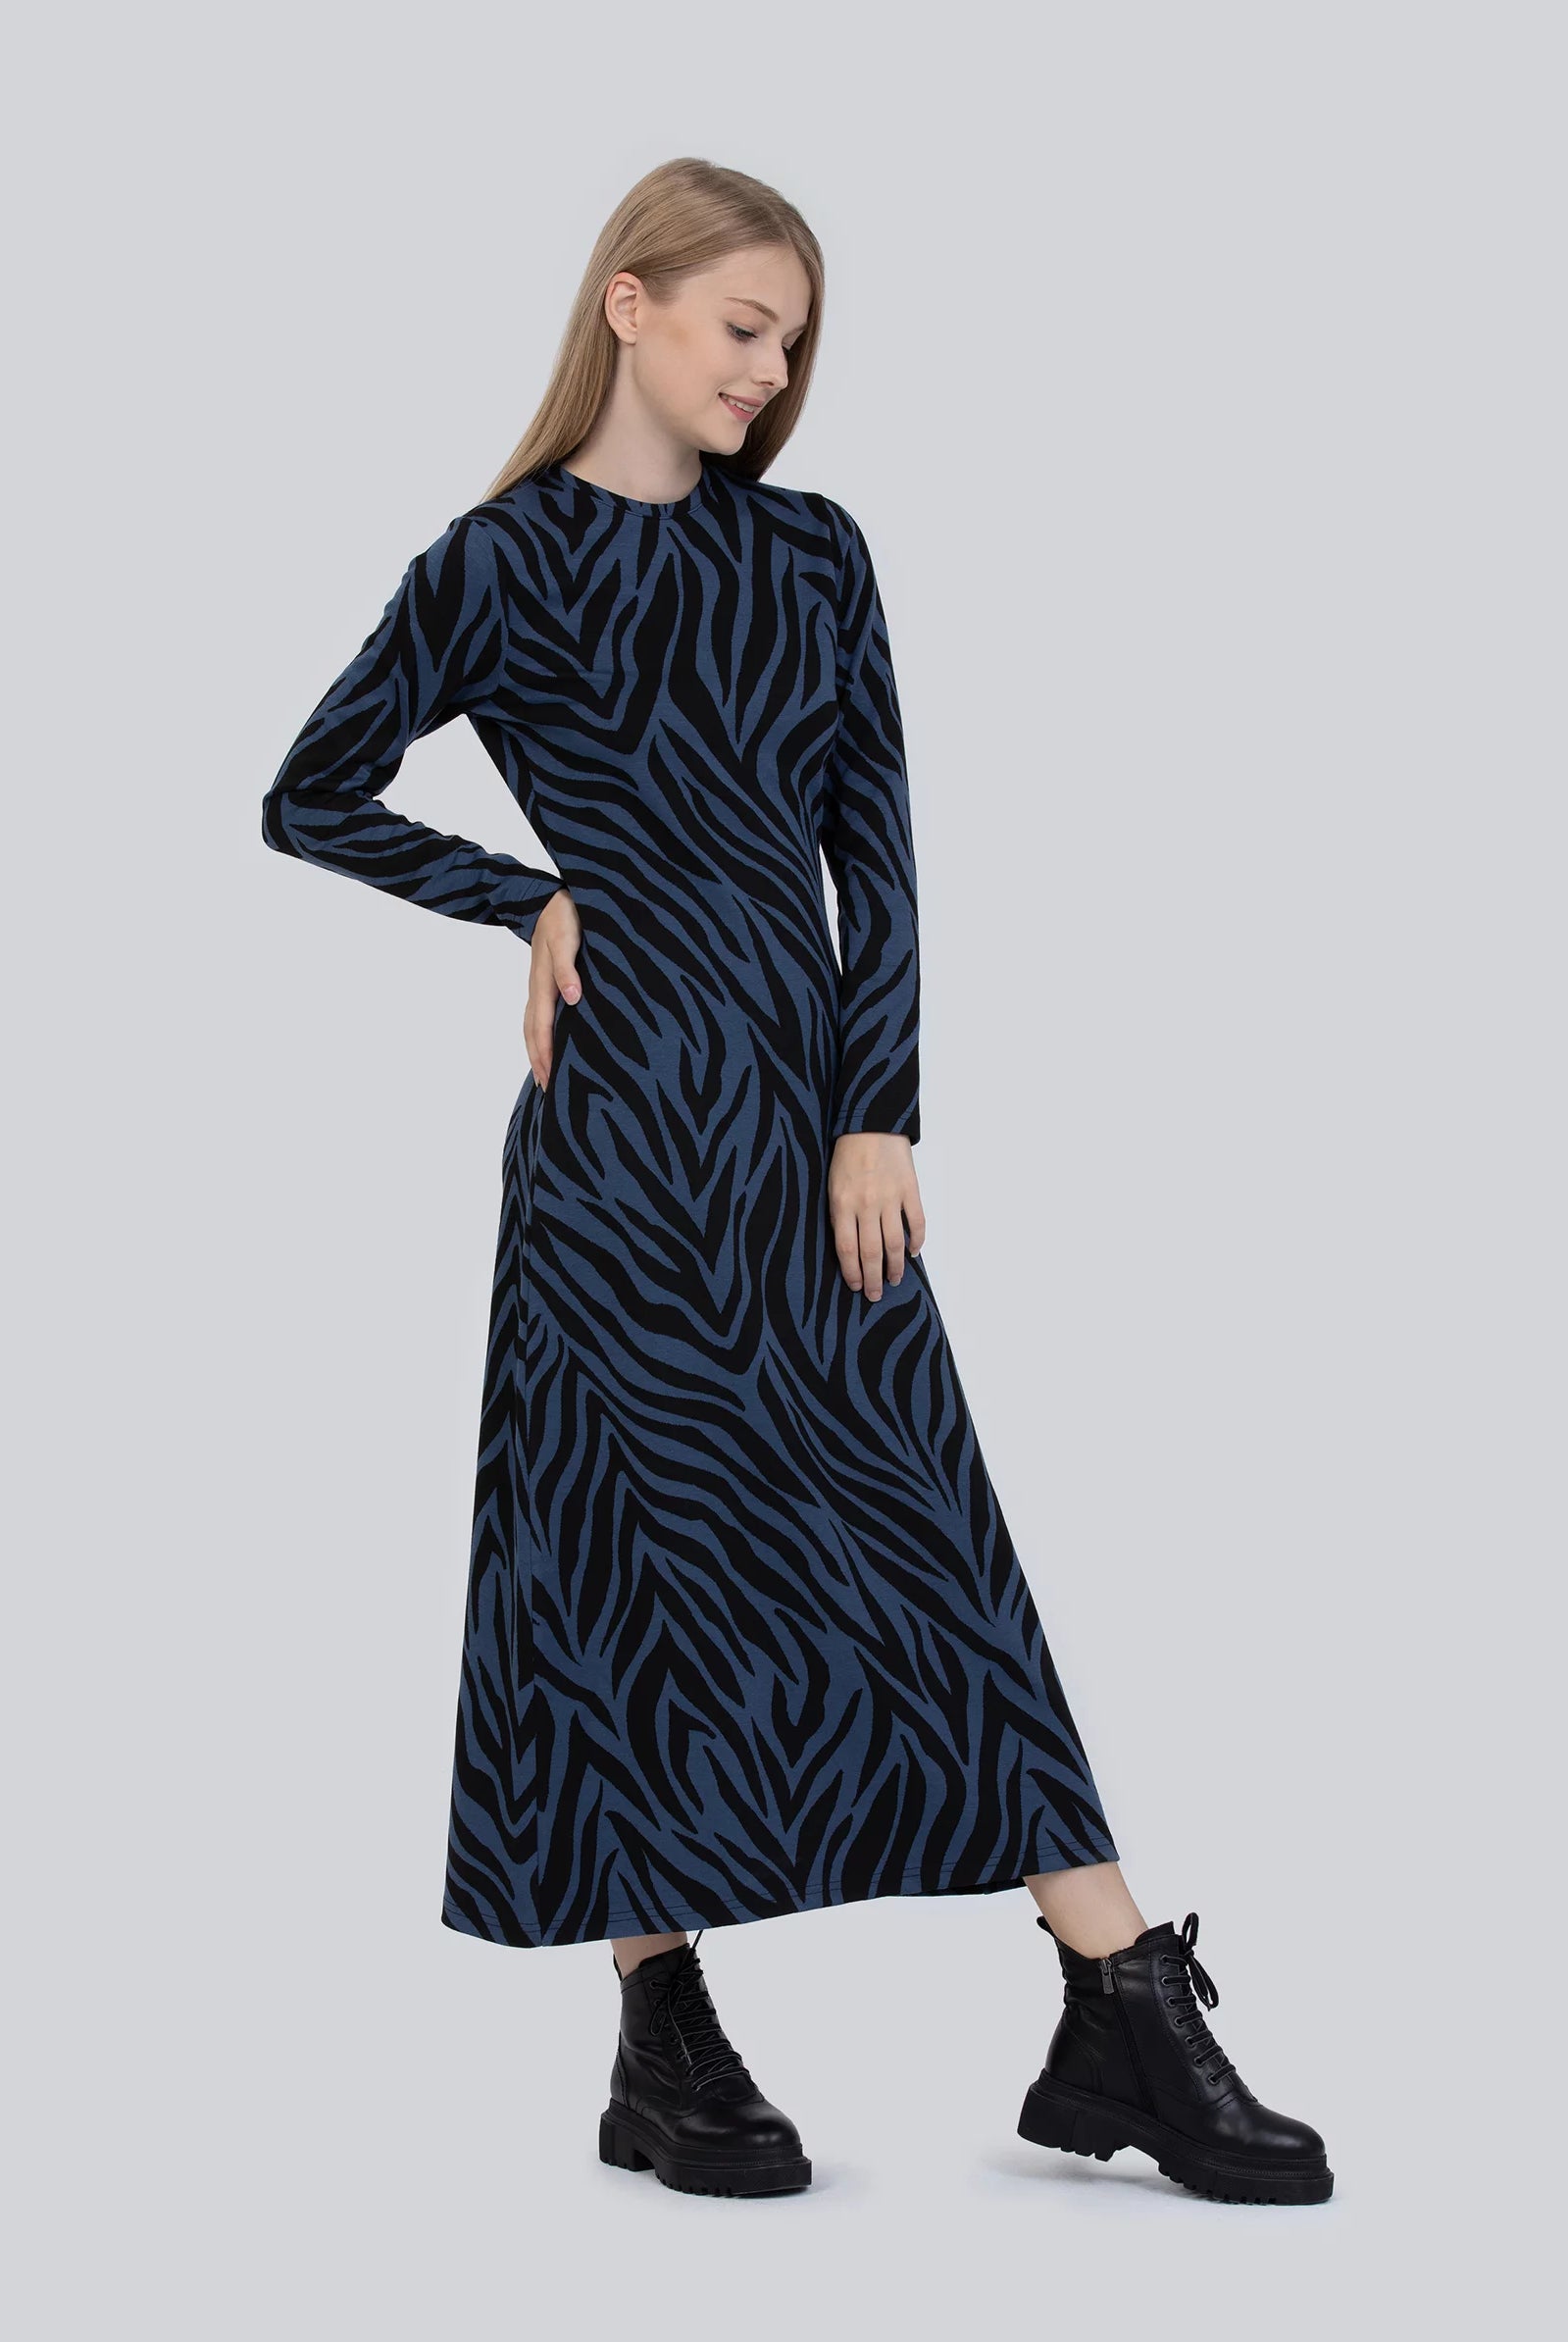 black zebra print dress